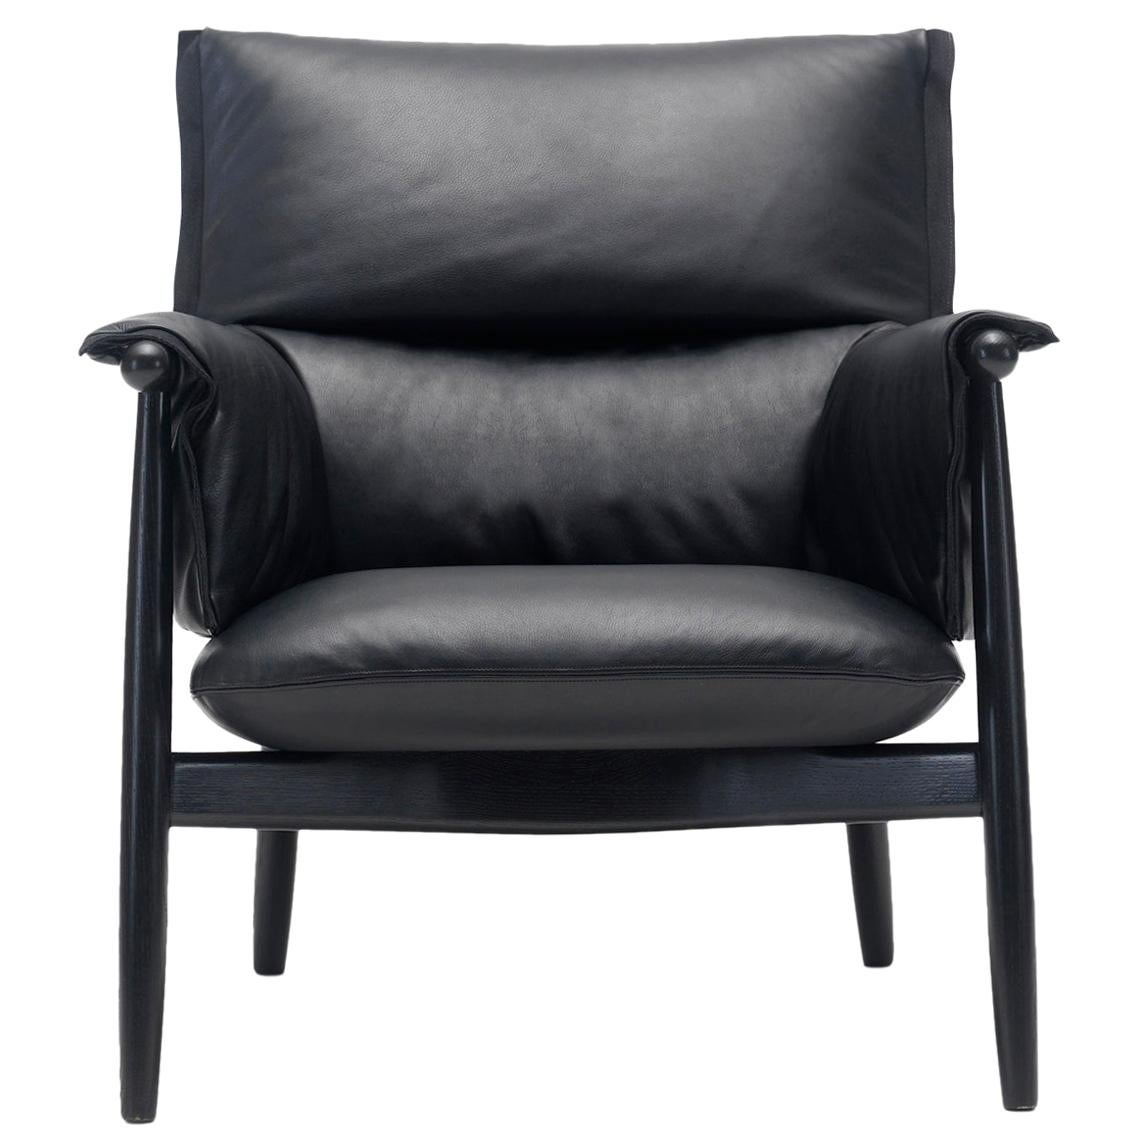 Black (Thor 301) E015 Embrace Lounge Chair in Painted Black Oak, Loke black leather, black edging